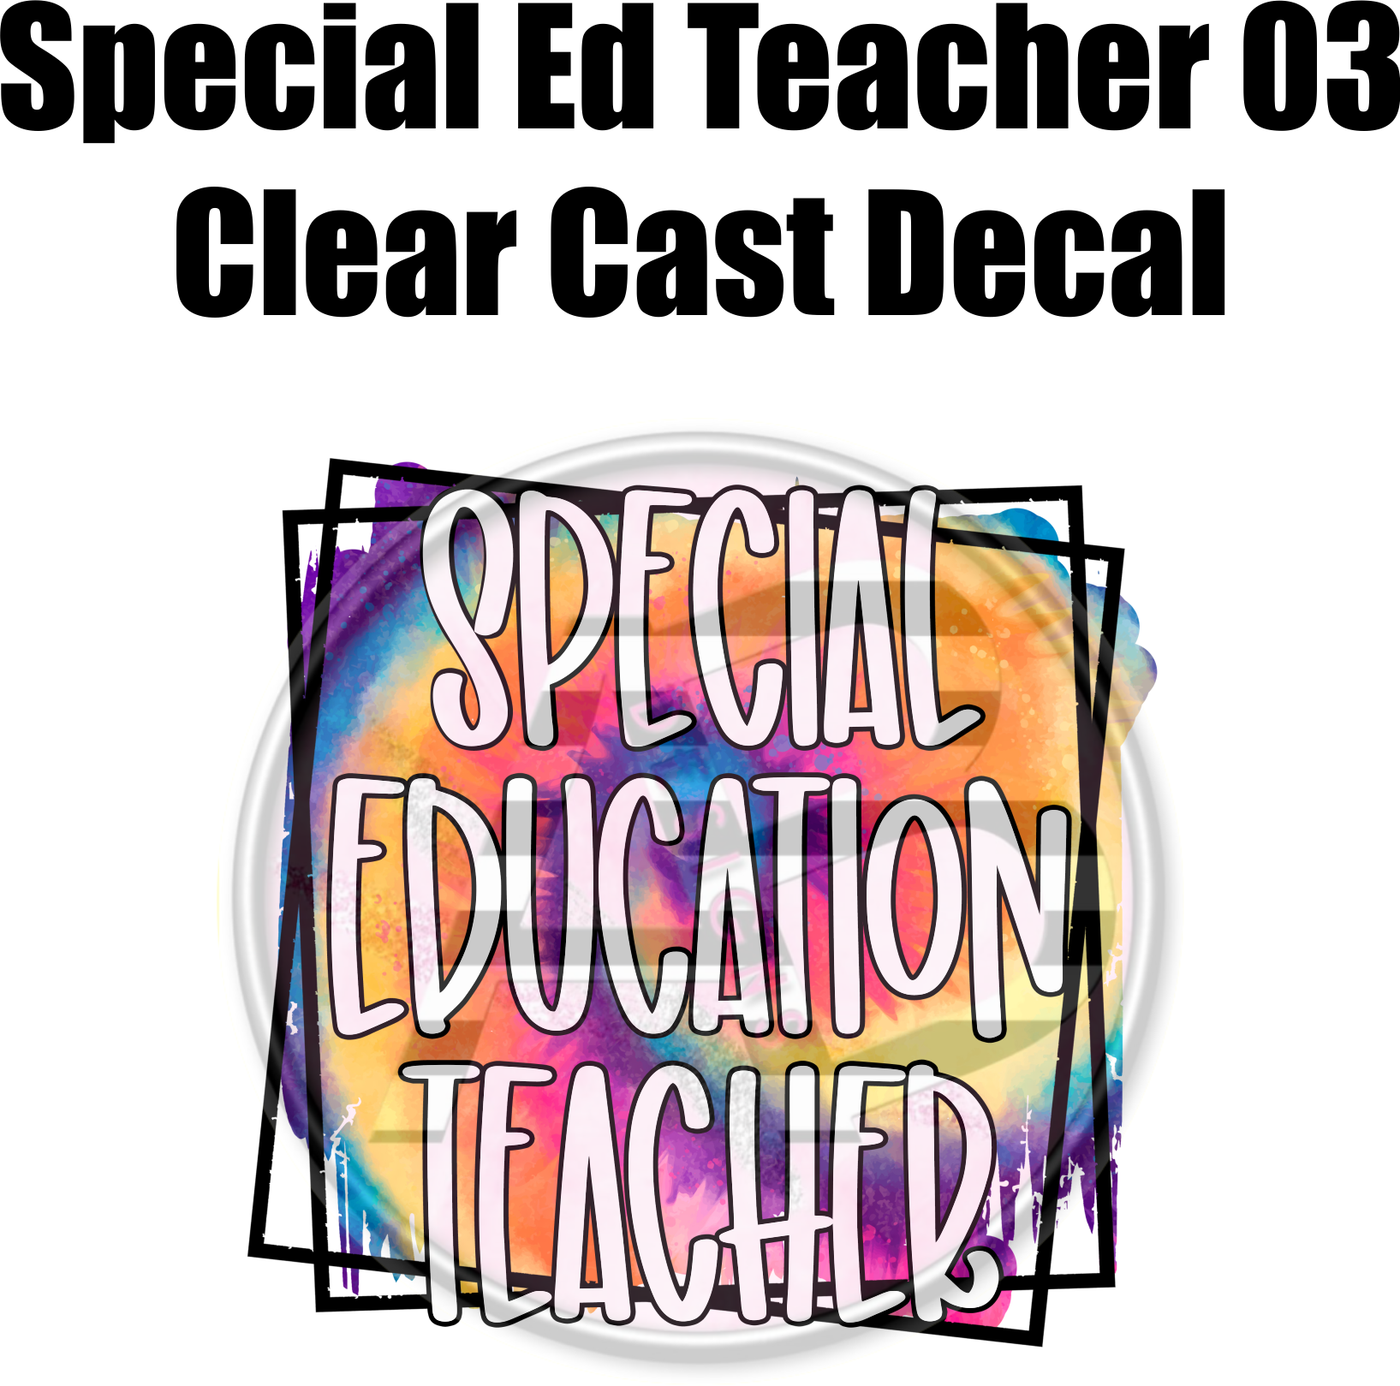 Special Education Teacher 03 - Clear Cast Decal - 50